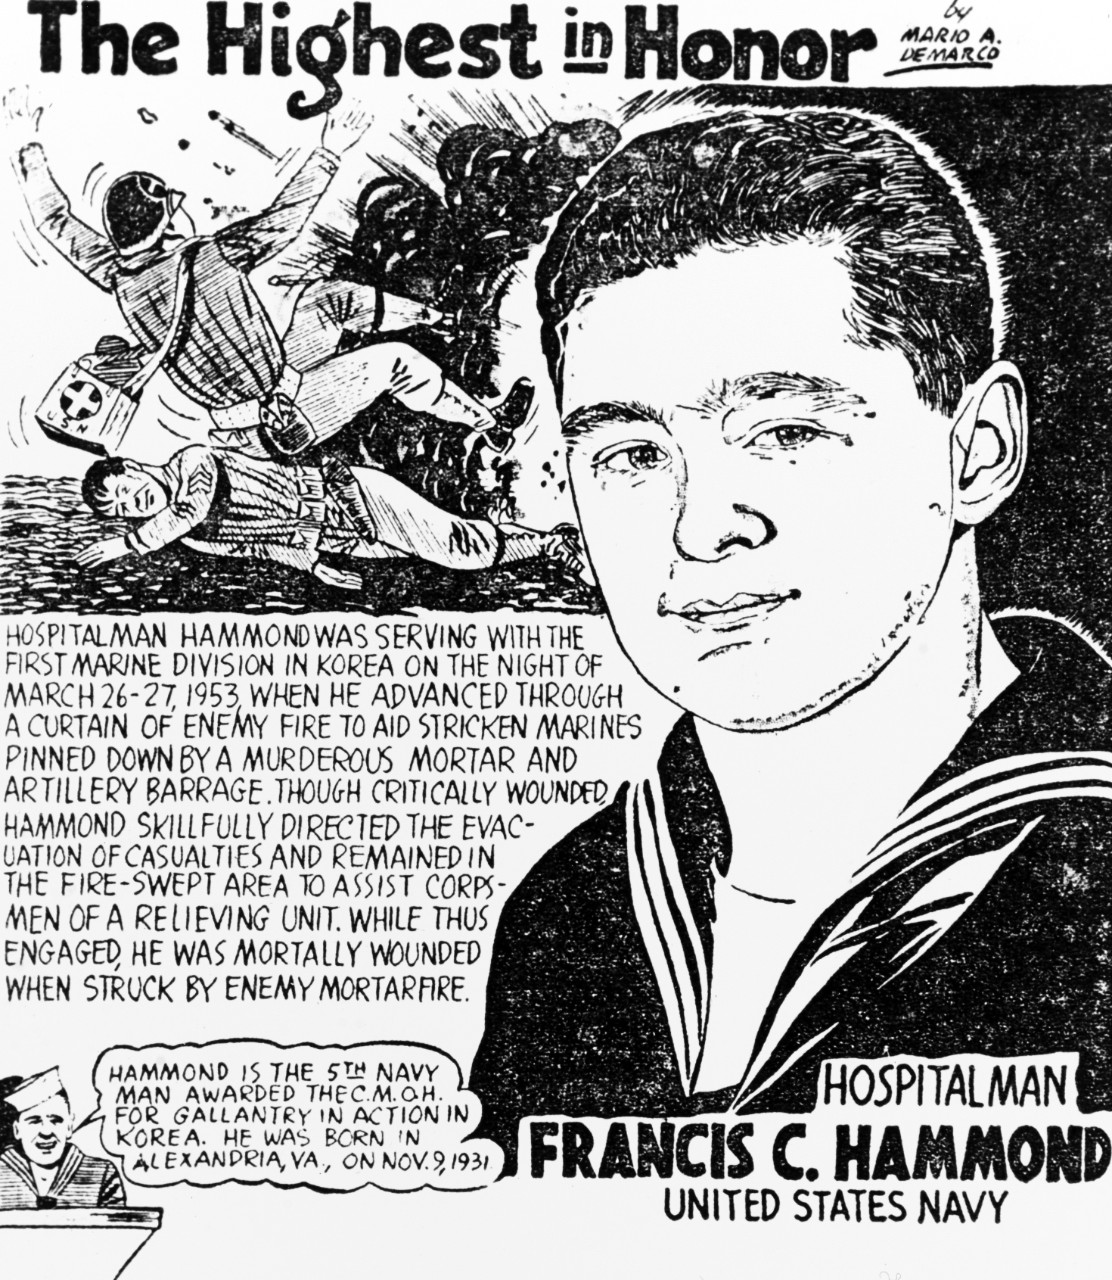 Francis C. Hammond, Hospitalman, USN